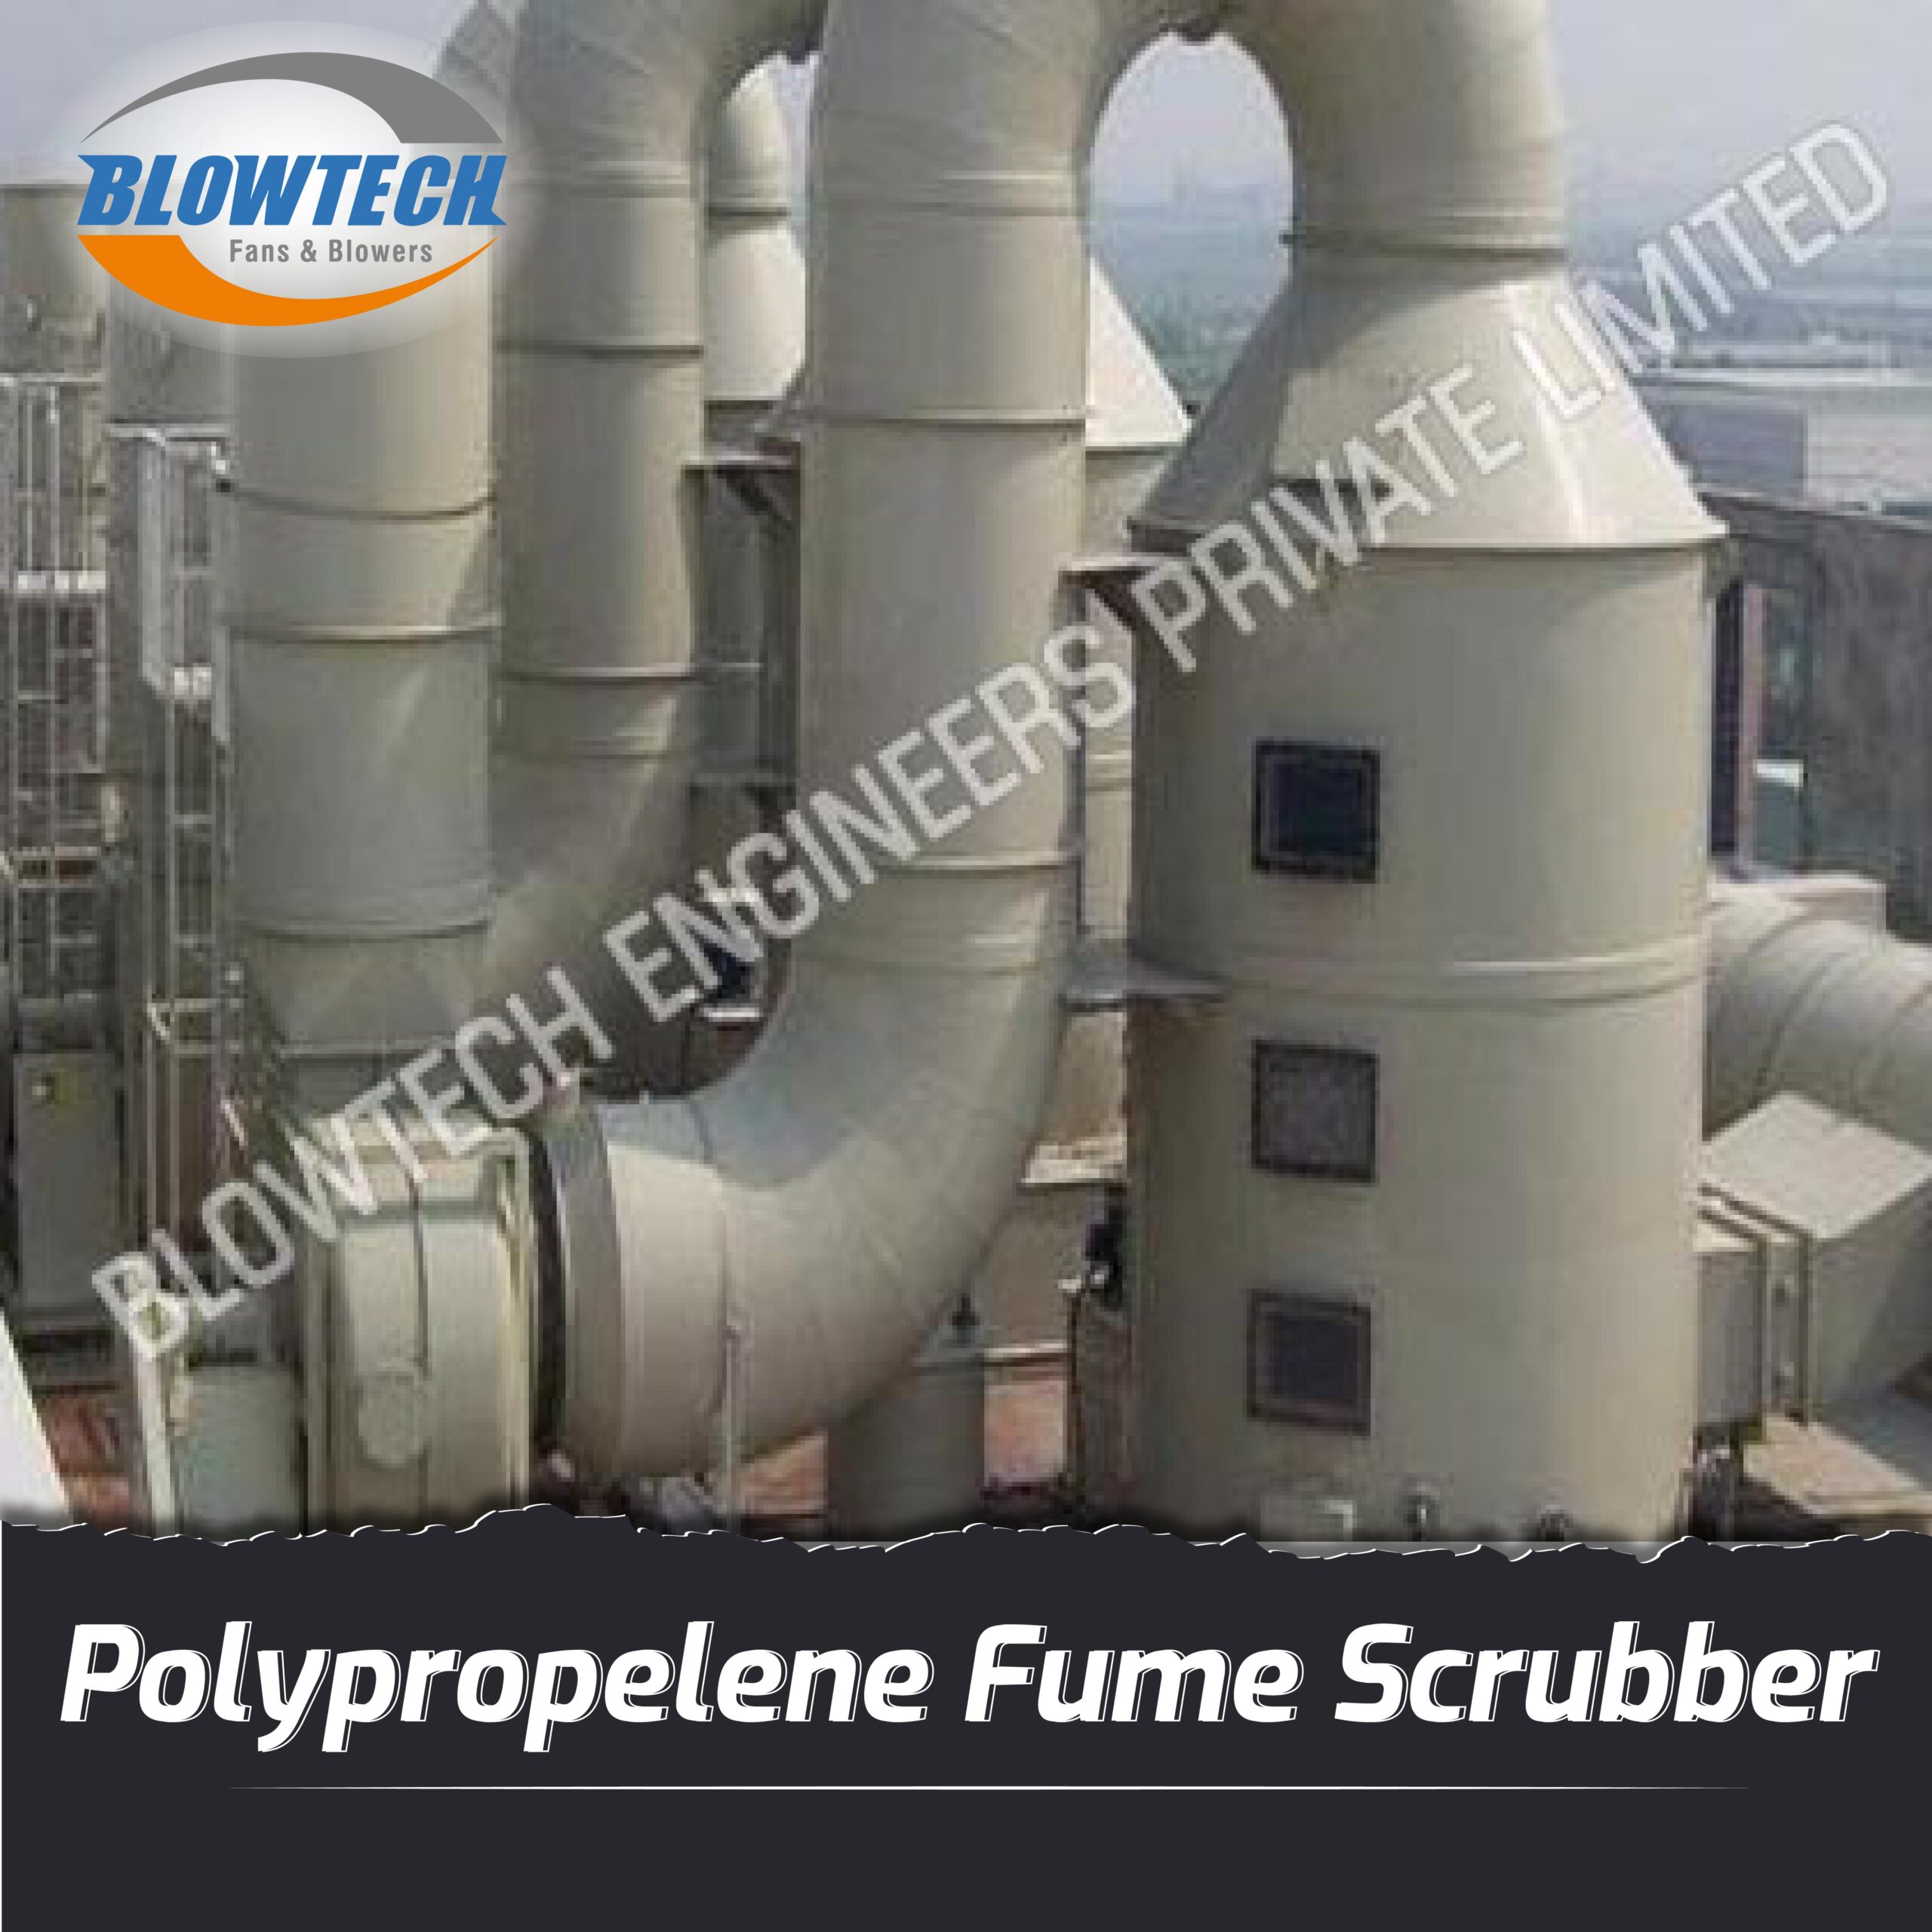 Polypropylene Fume Scrubber  manufacturer, supplier and exporter in Mumbai, India